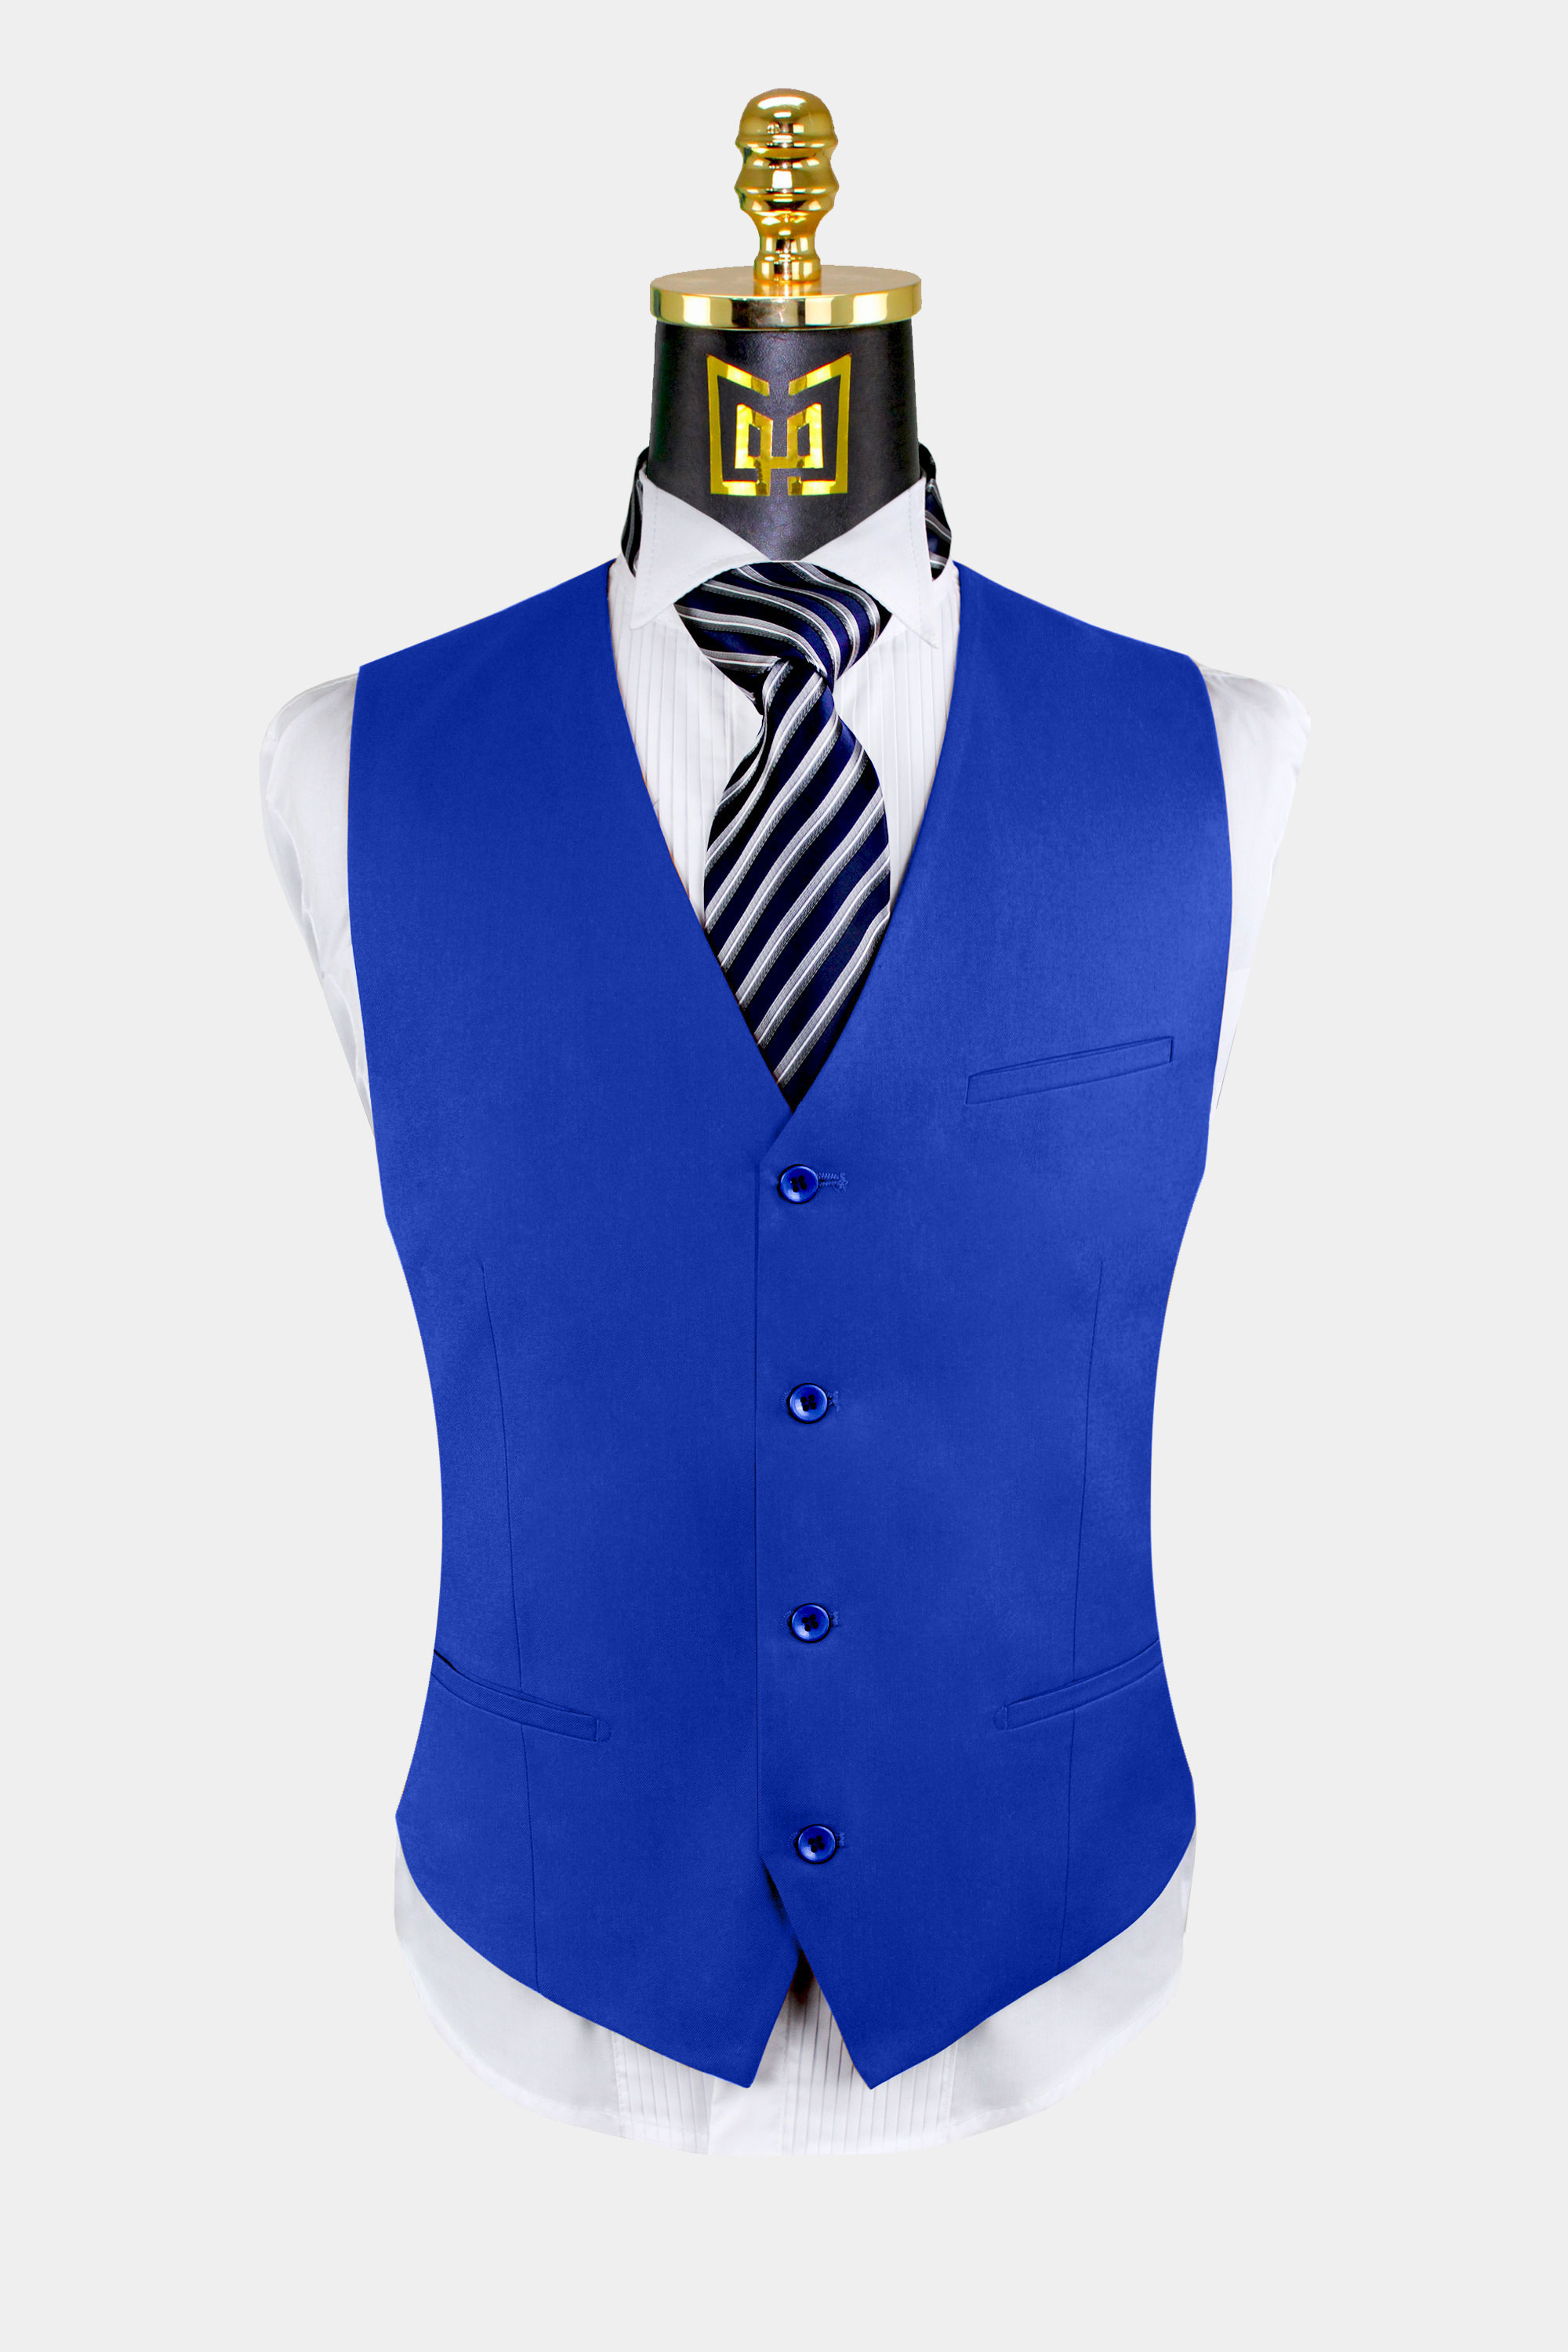 Royal-Blue-Suit-Vest-from-Gentlemansguru.com